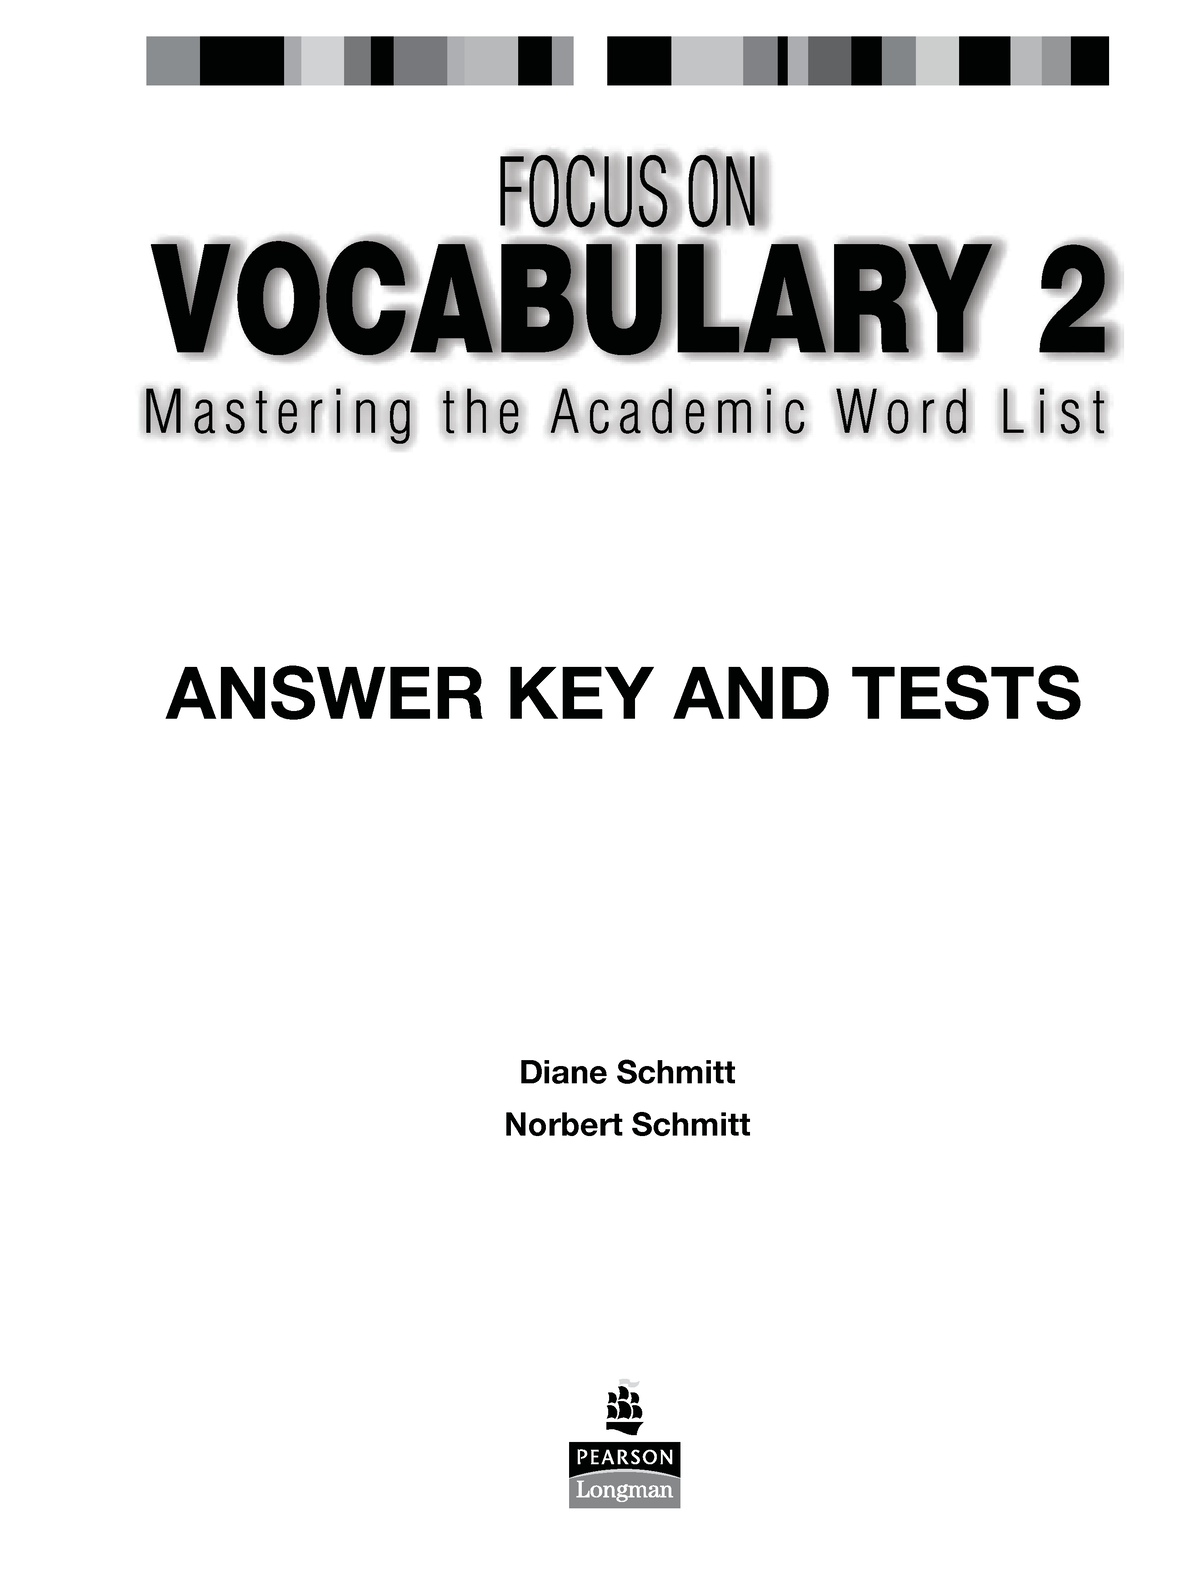 Focus on Voc 2 answers - Vocabulary - FOCUS ON VOCABULARY 2 M